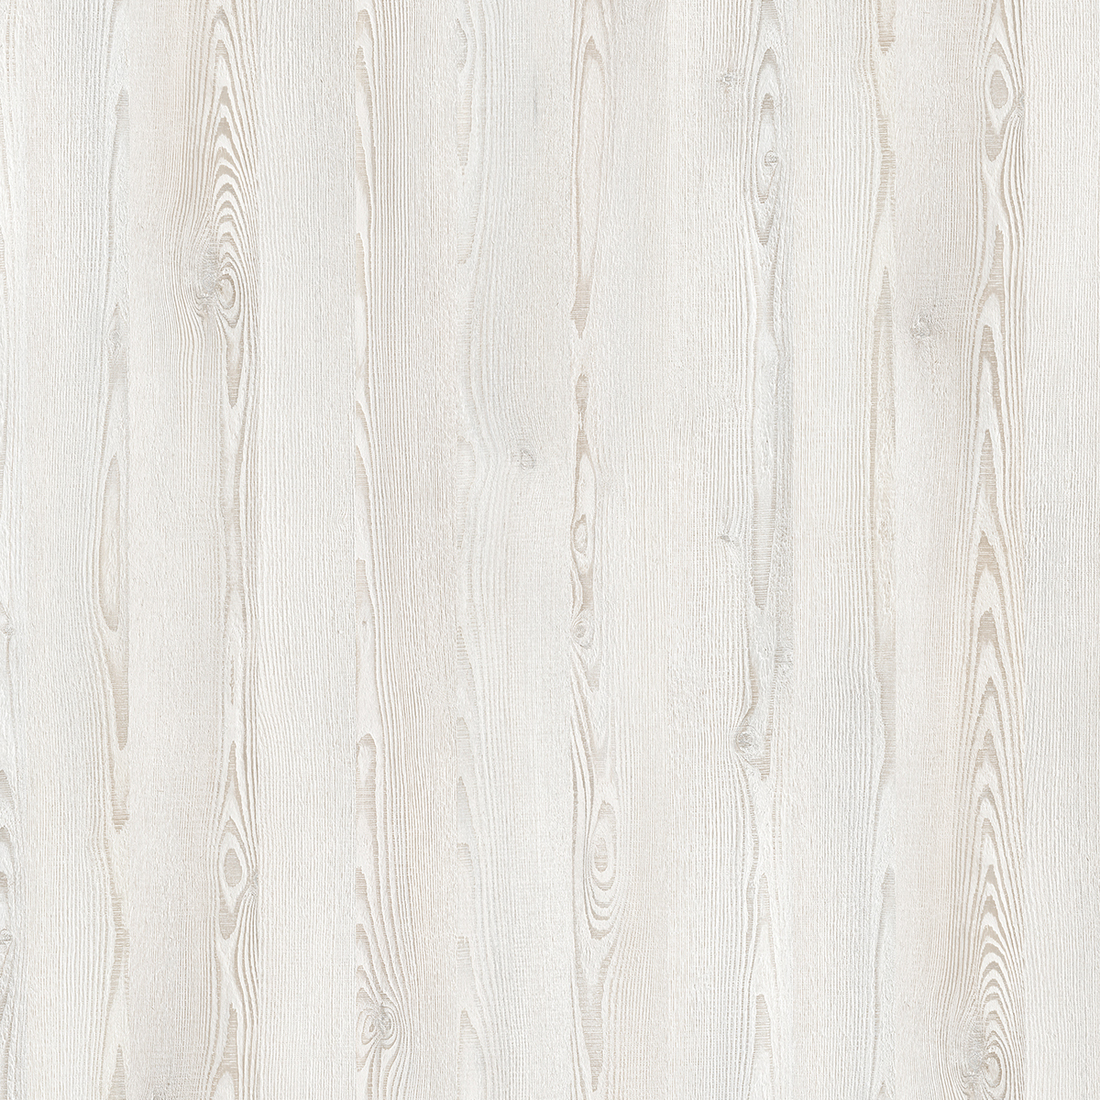 K010SN - White Loft Pine